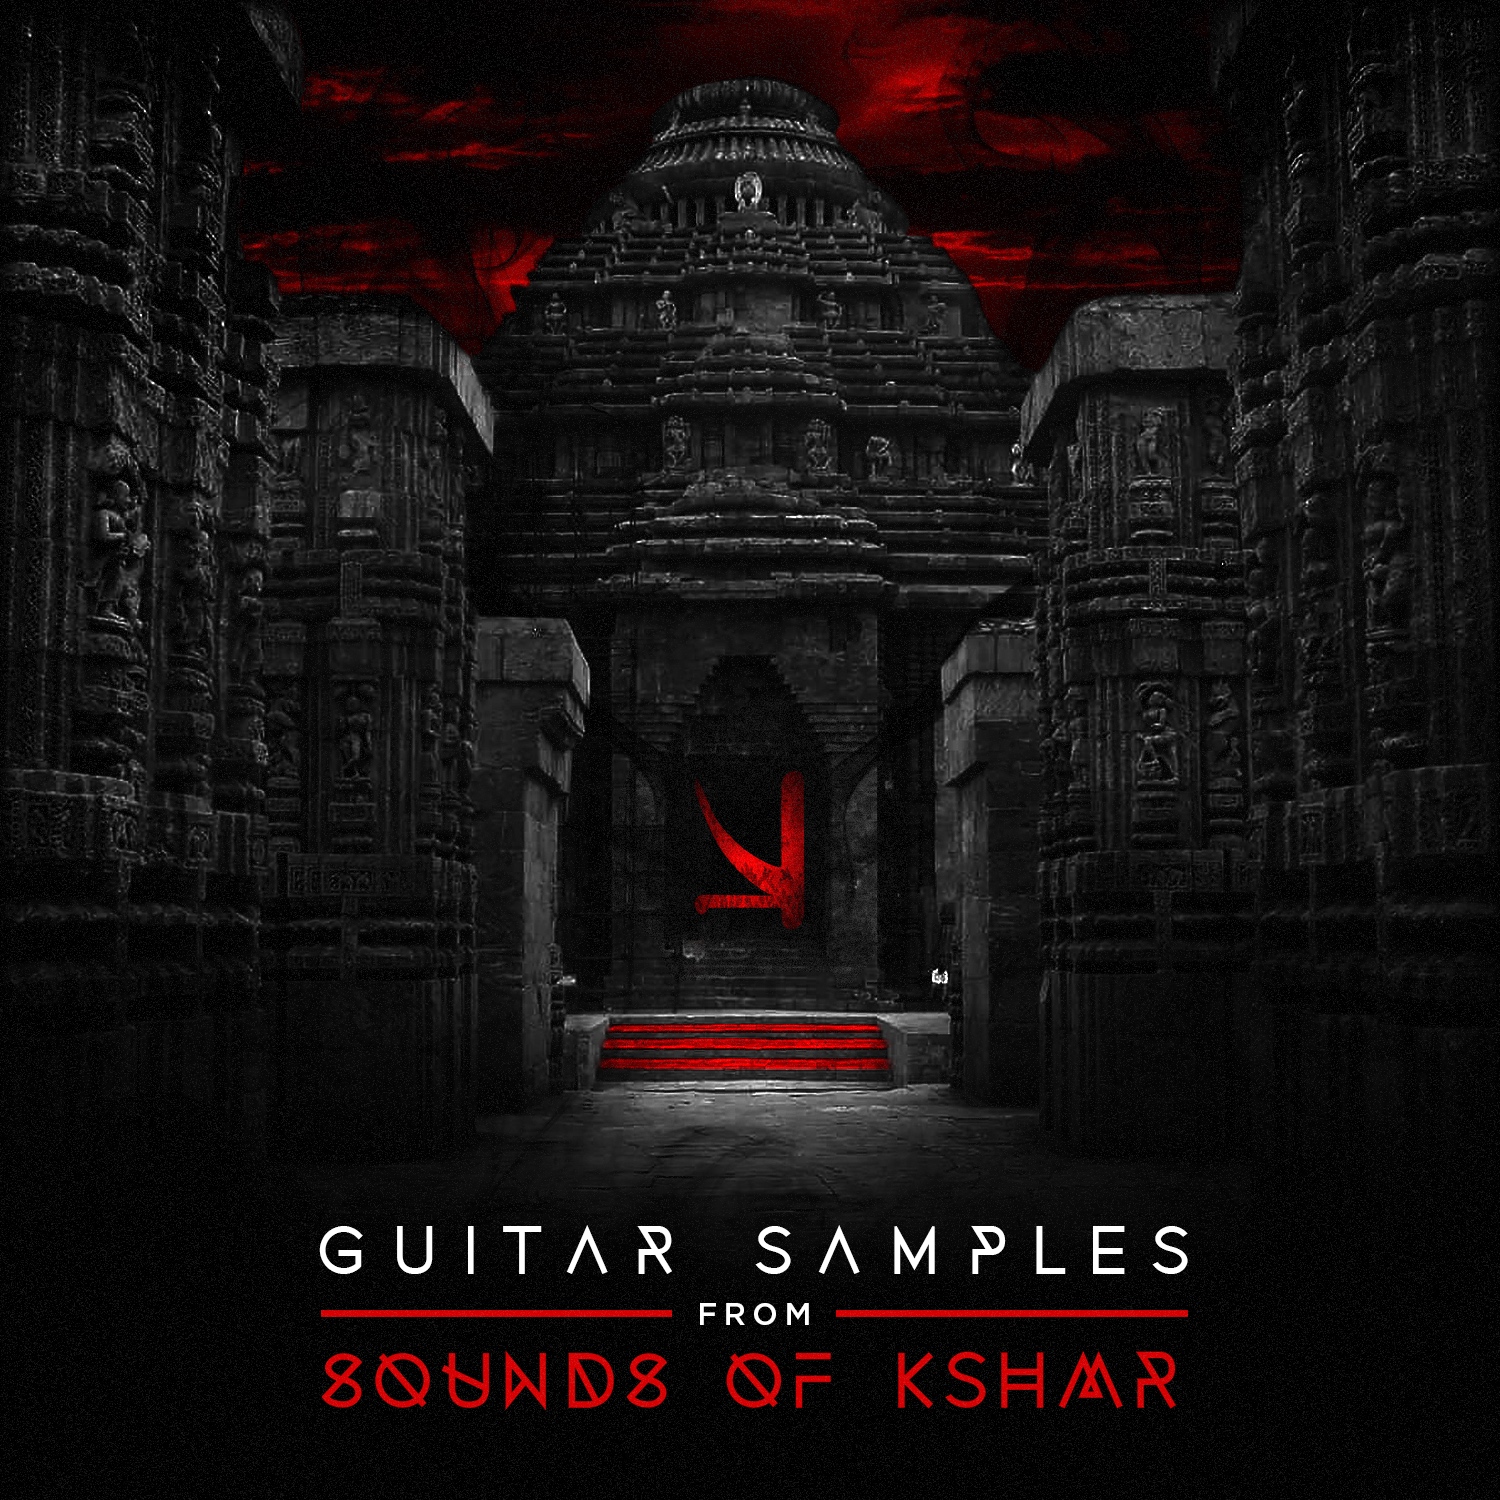 Guitar Samples from Sounds of KSHMR